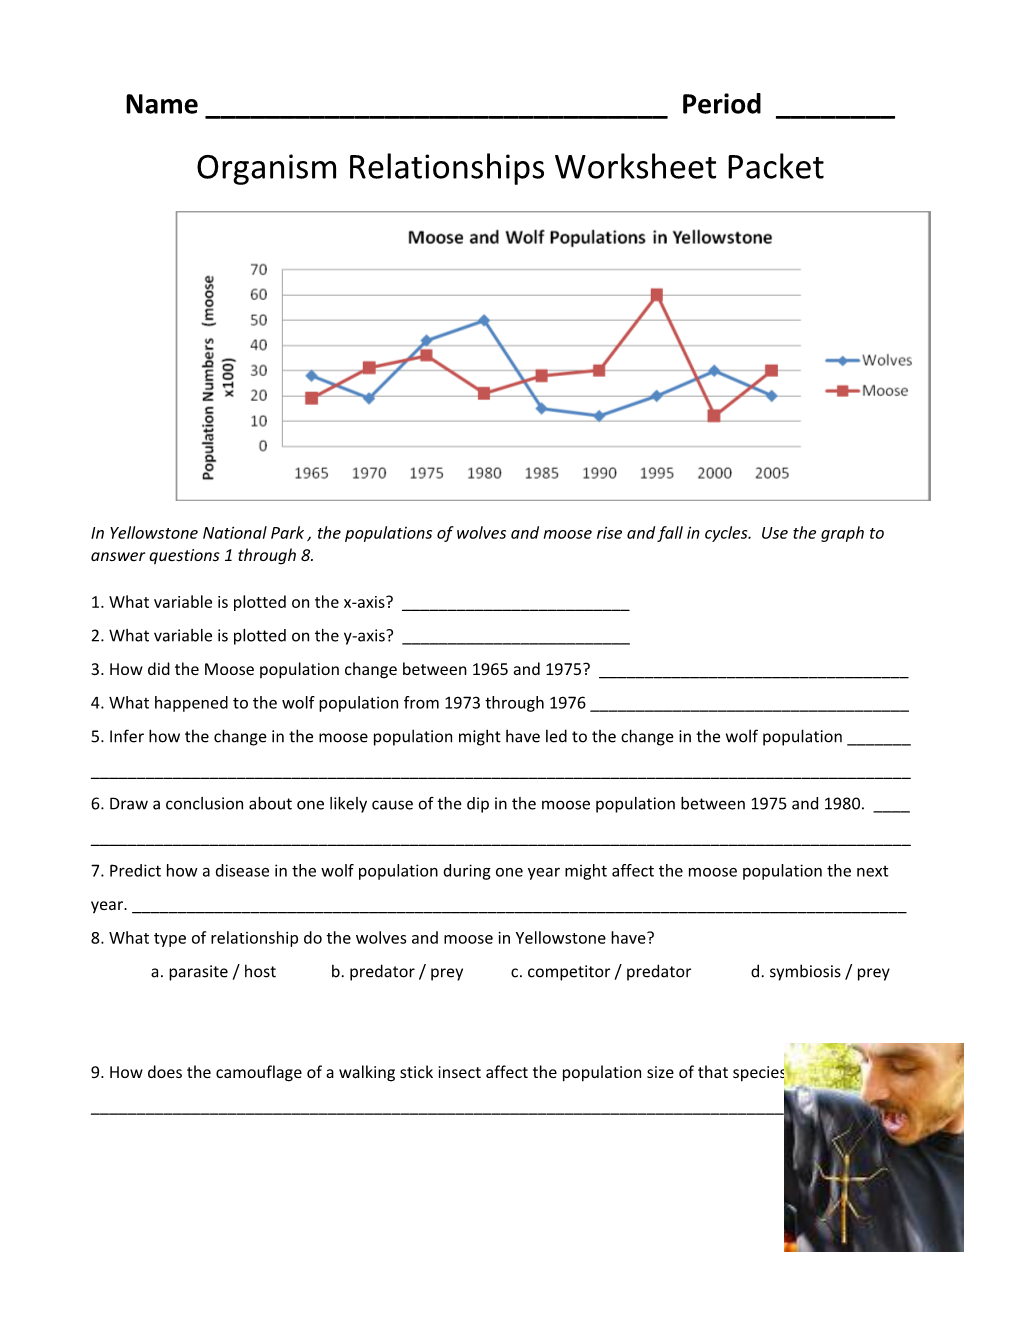 Organism Relationships Worksheet Packet